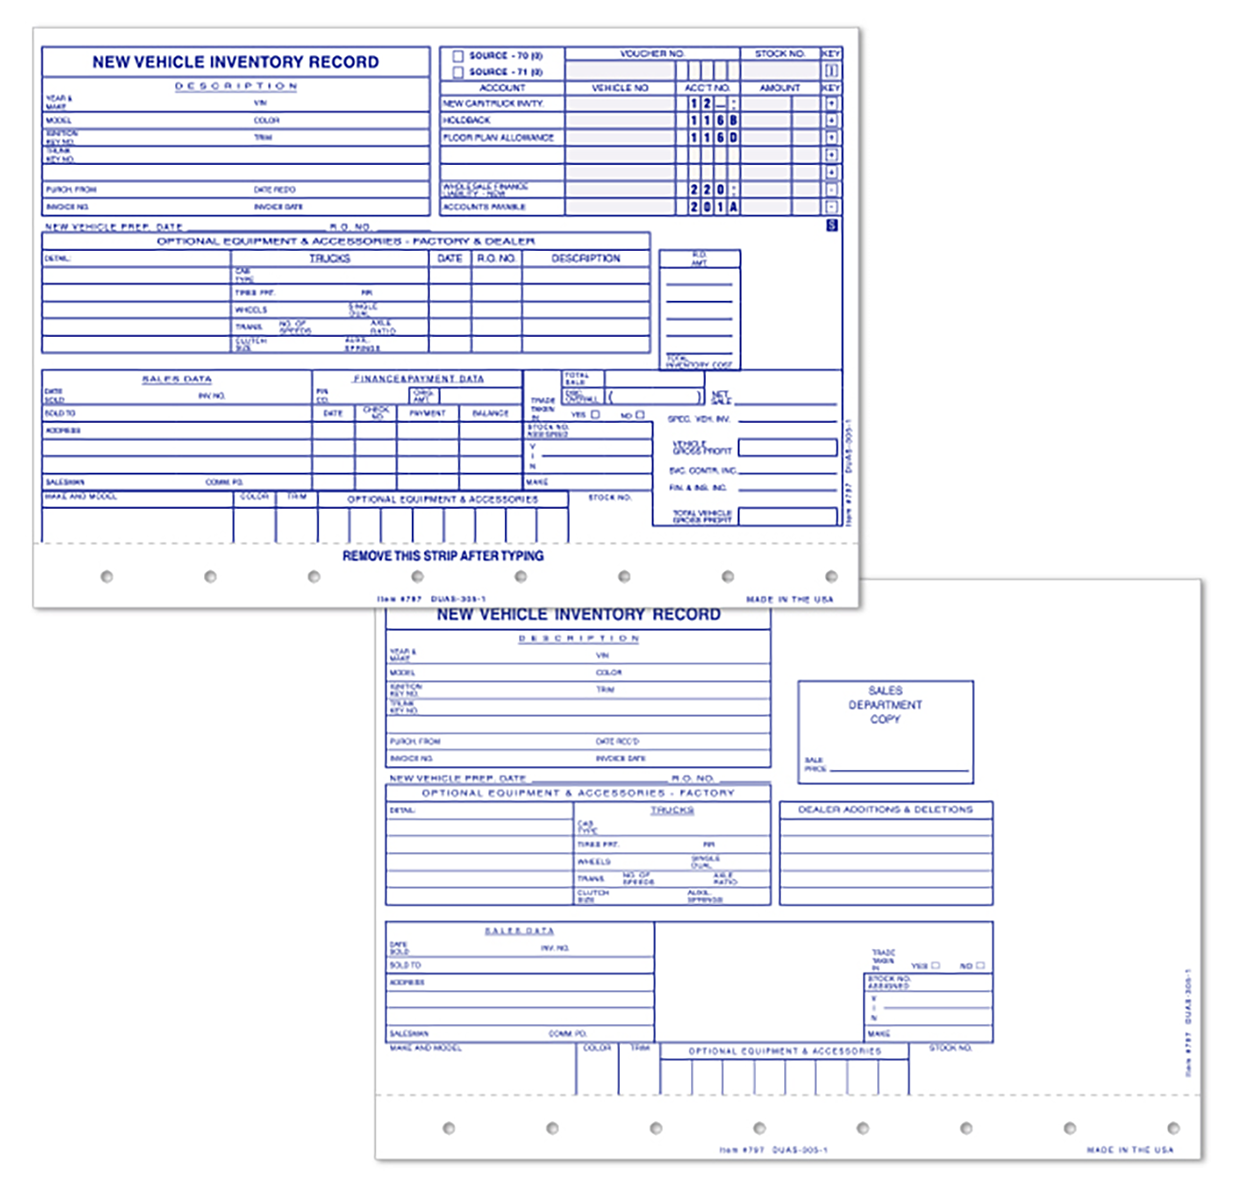 New Vehicle Inventory Records (DUAS-305-1)